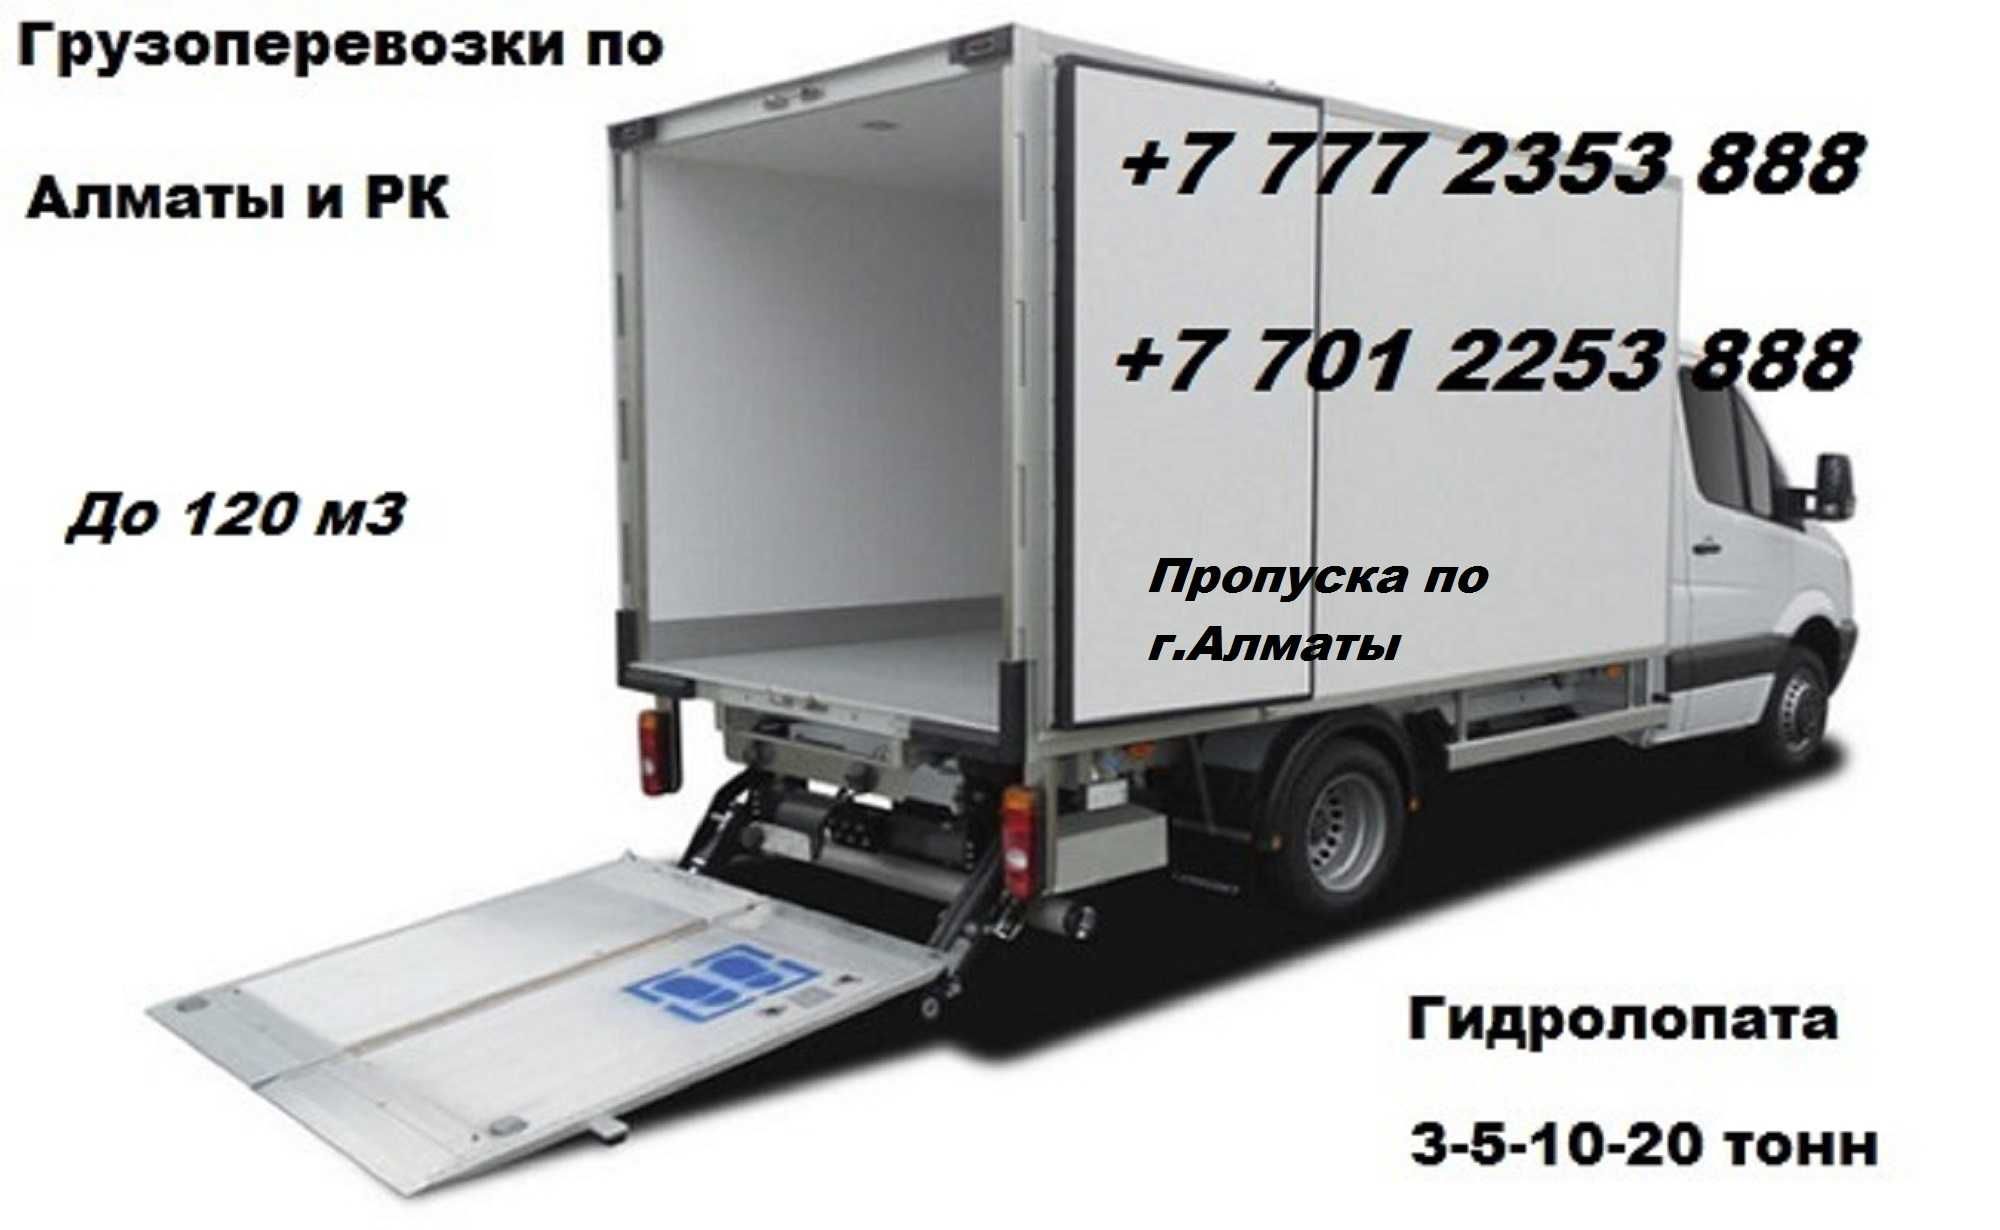 Грузоперевозки  3-5-10 тонн  гидролопата/гидроборт  Алматы и Казахстан